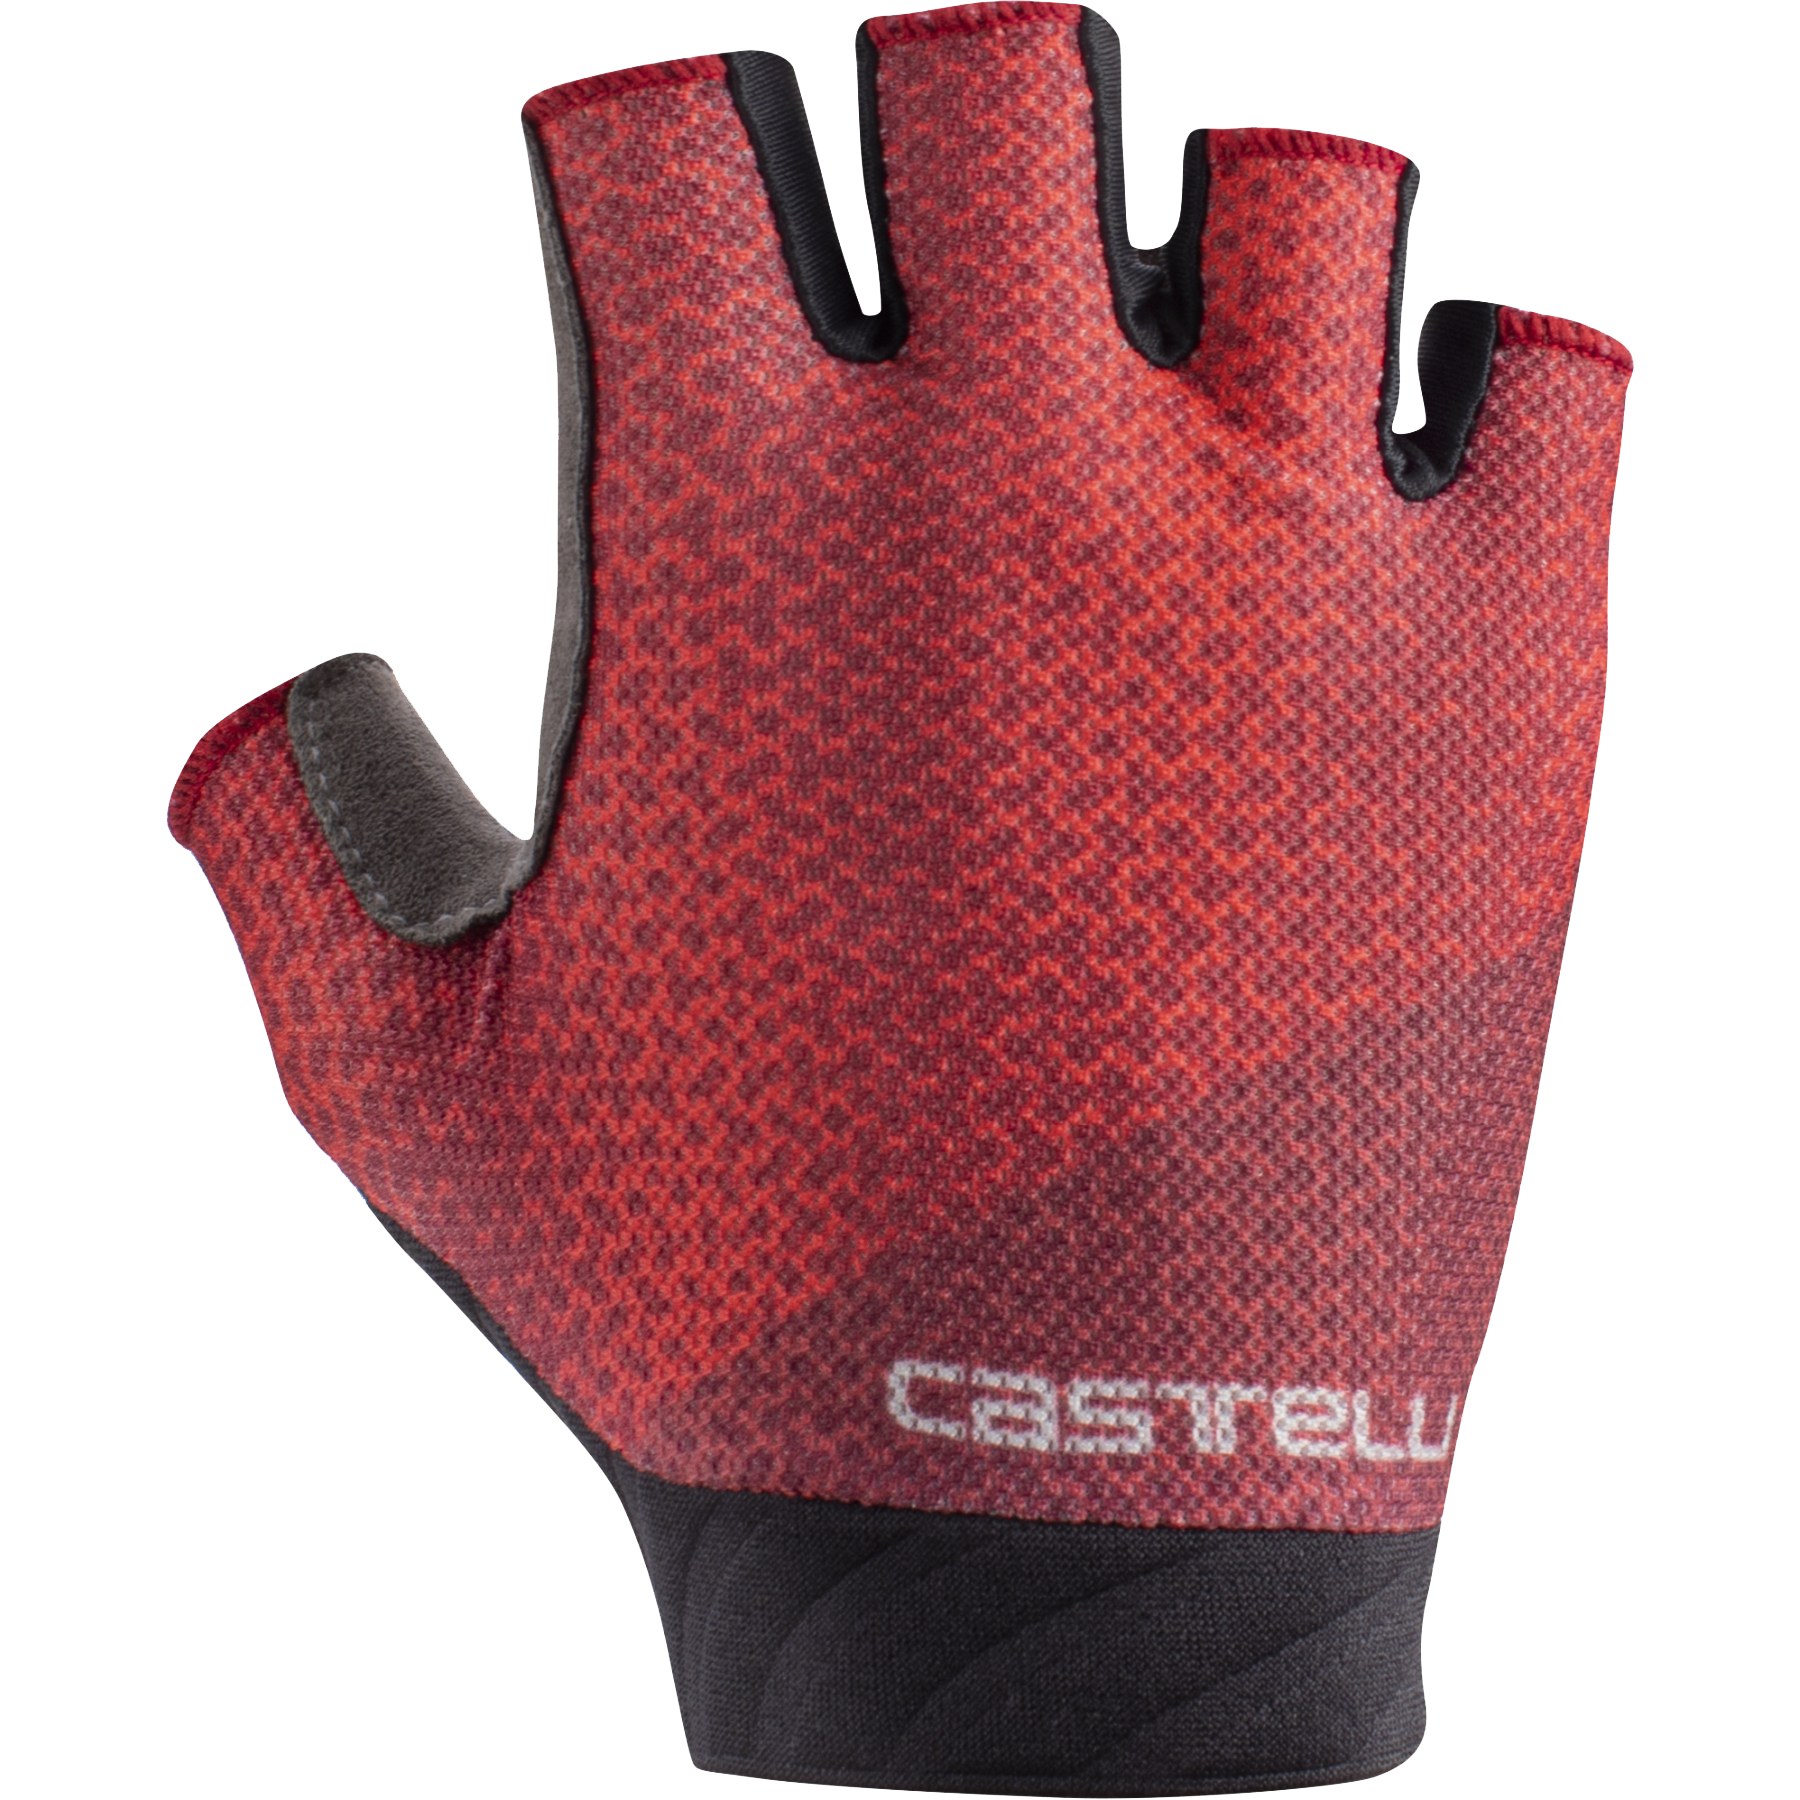 Bild von Castelli Roubaix Gel 2 Kurzfinger-Handschuhe Damen - hibiscus 081